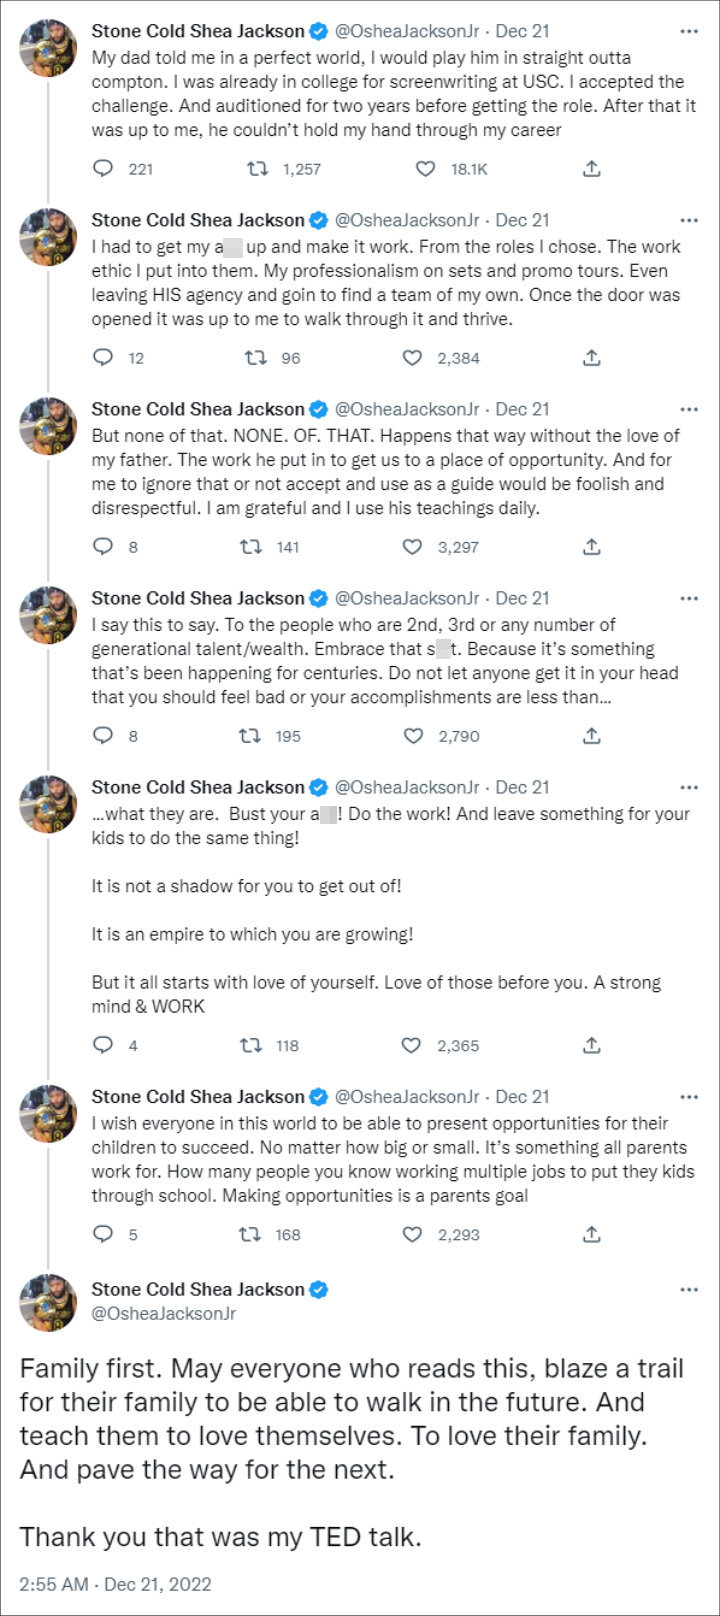 O'Shea Jackson Jr.'s Tweets